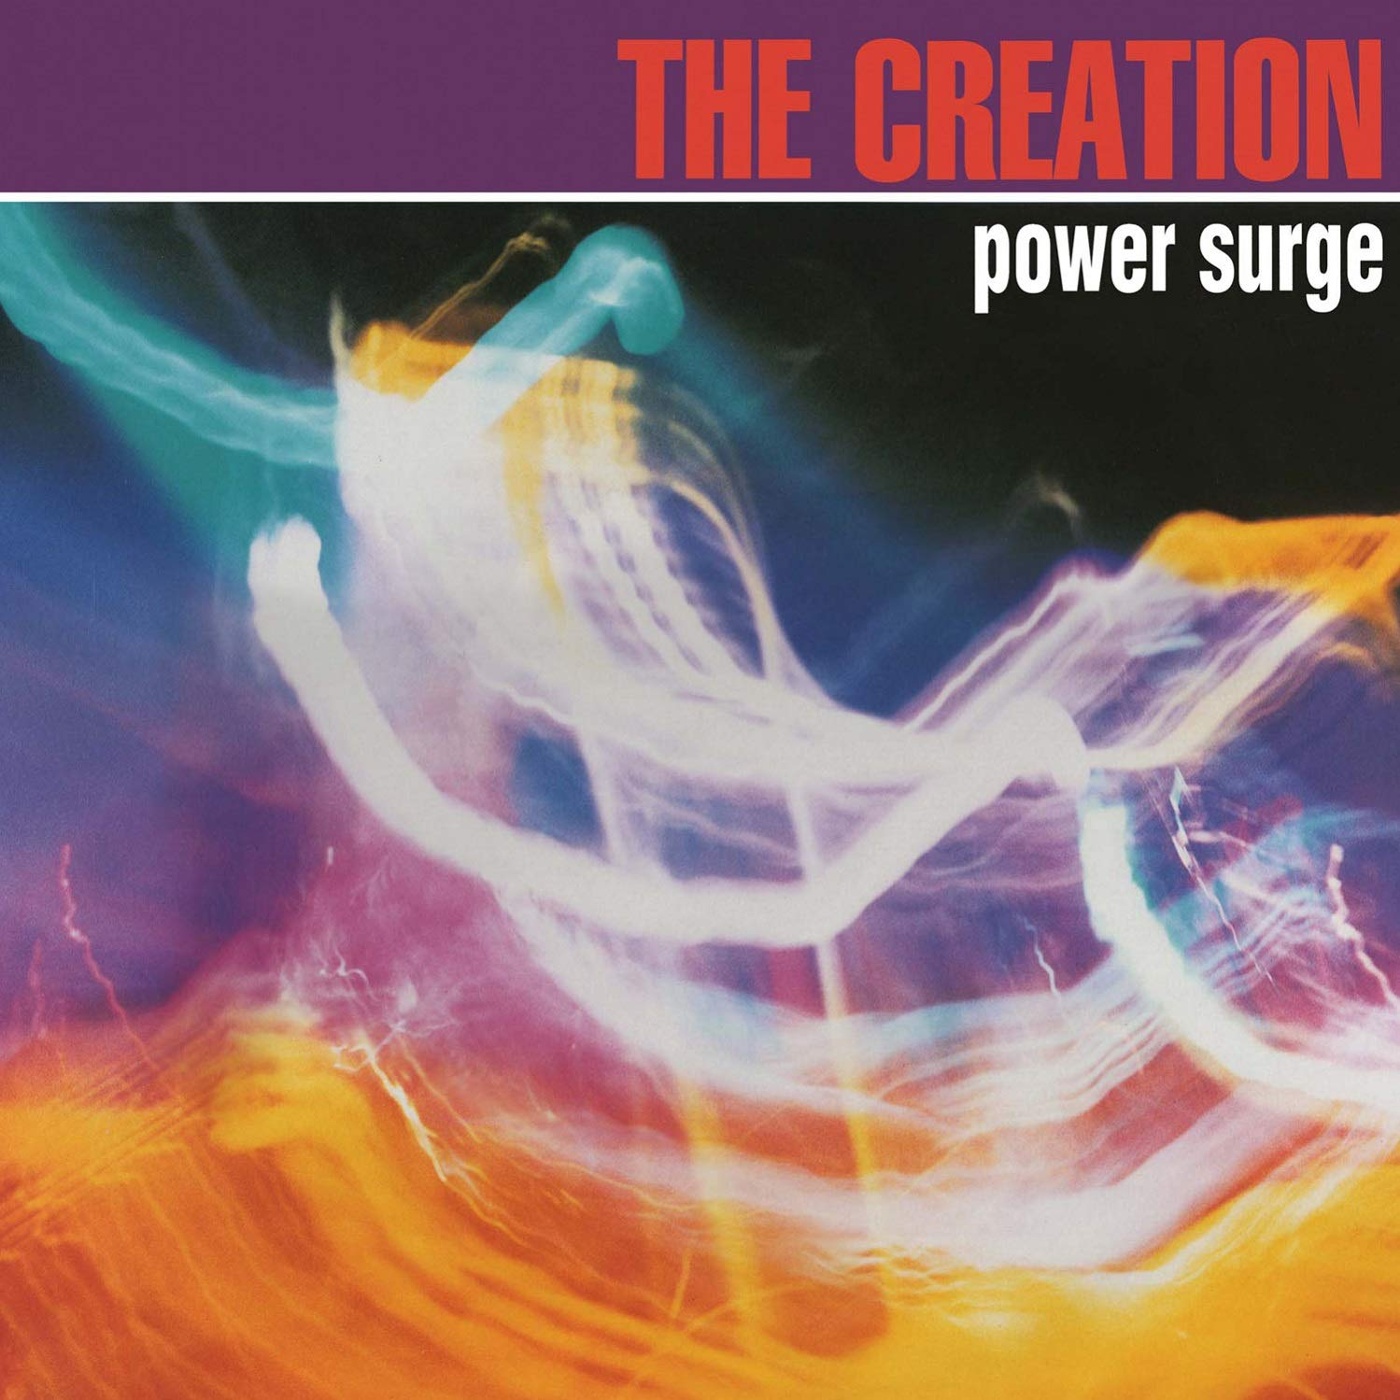 The Power and Creation книга. ((( O ))) альбом ((( 1 ))) Creation. Creation "Power Surge". Power surge